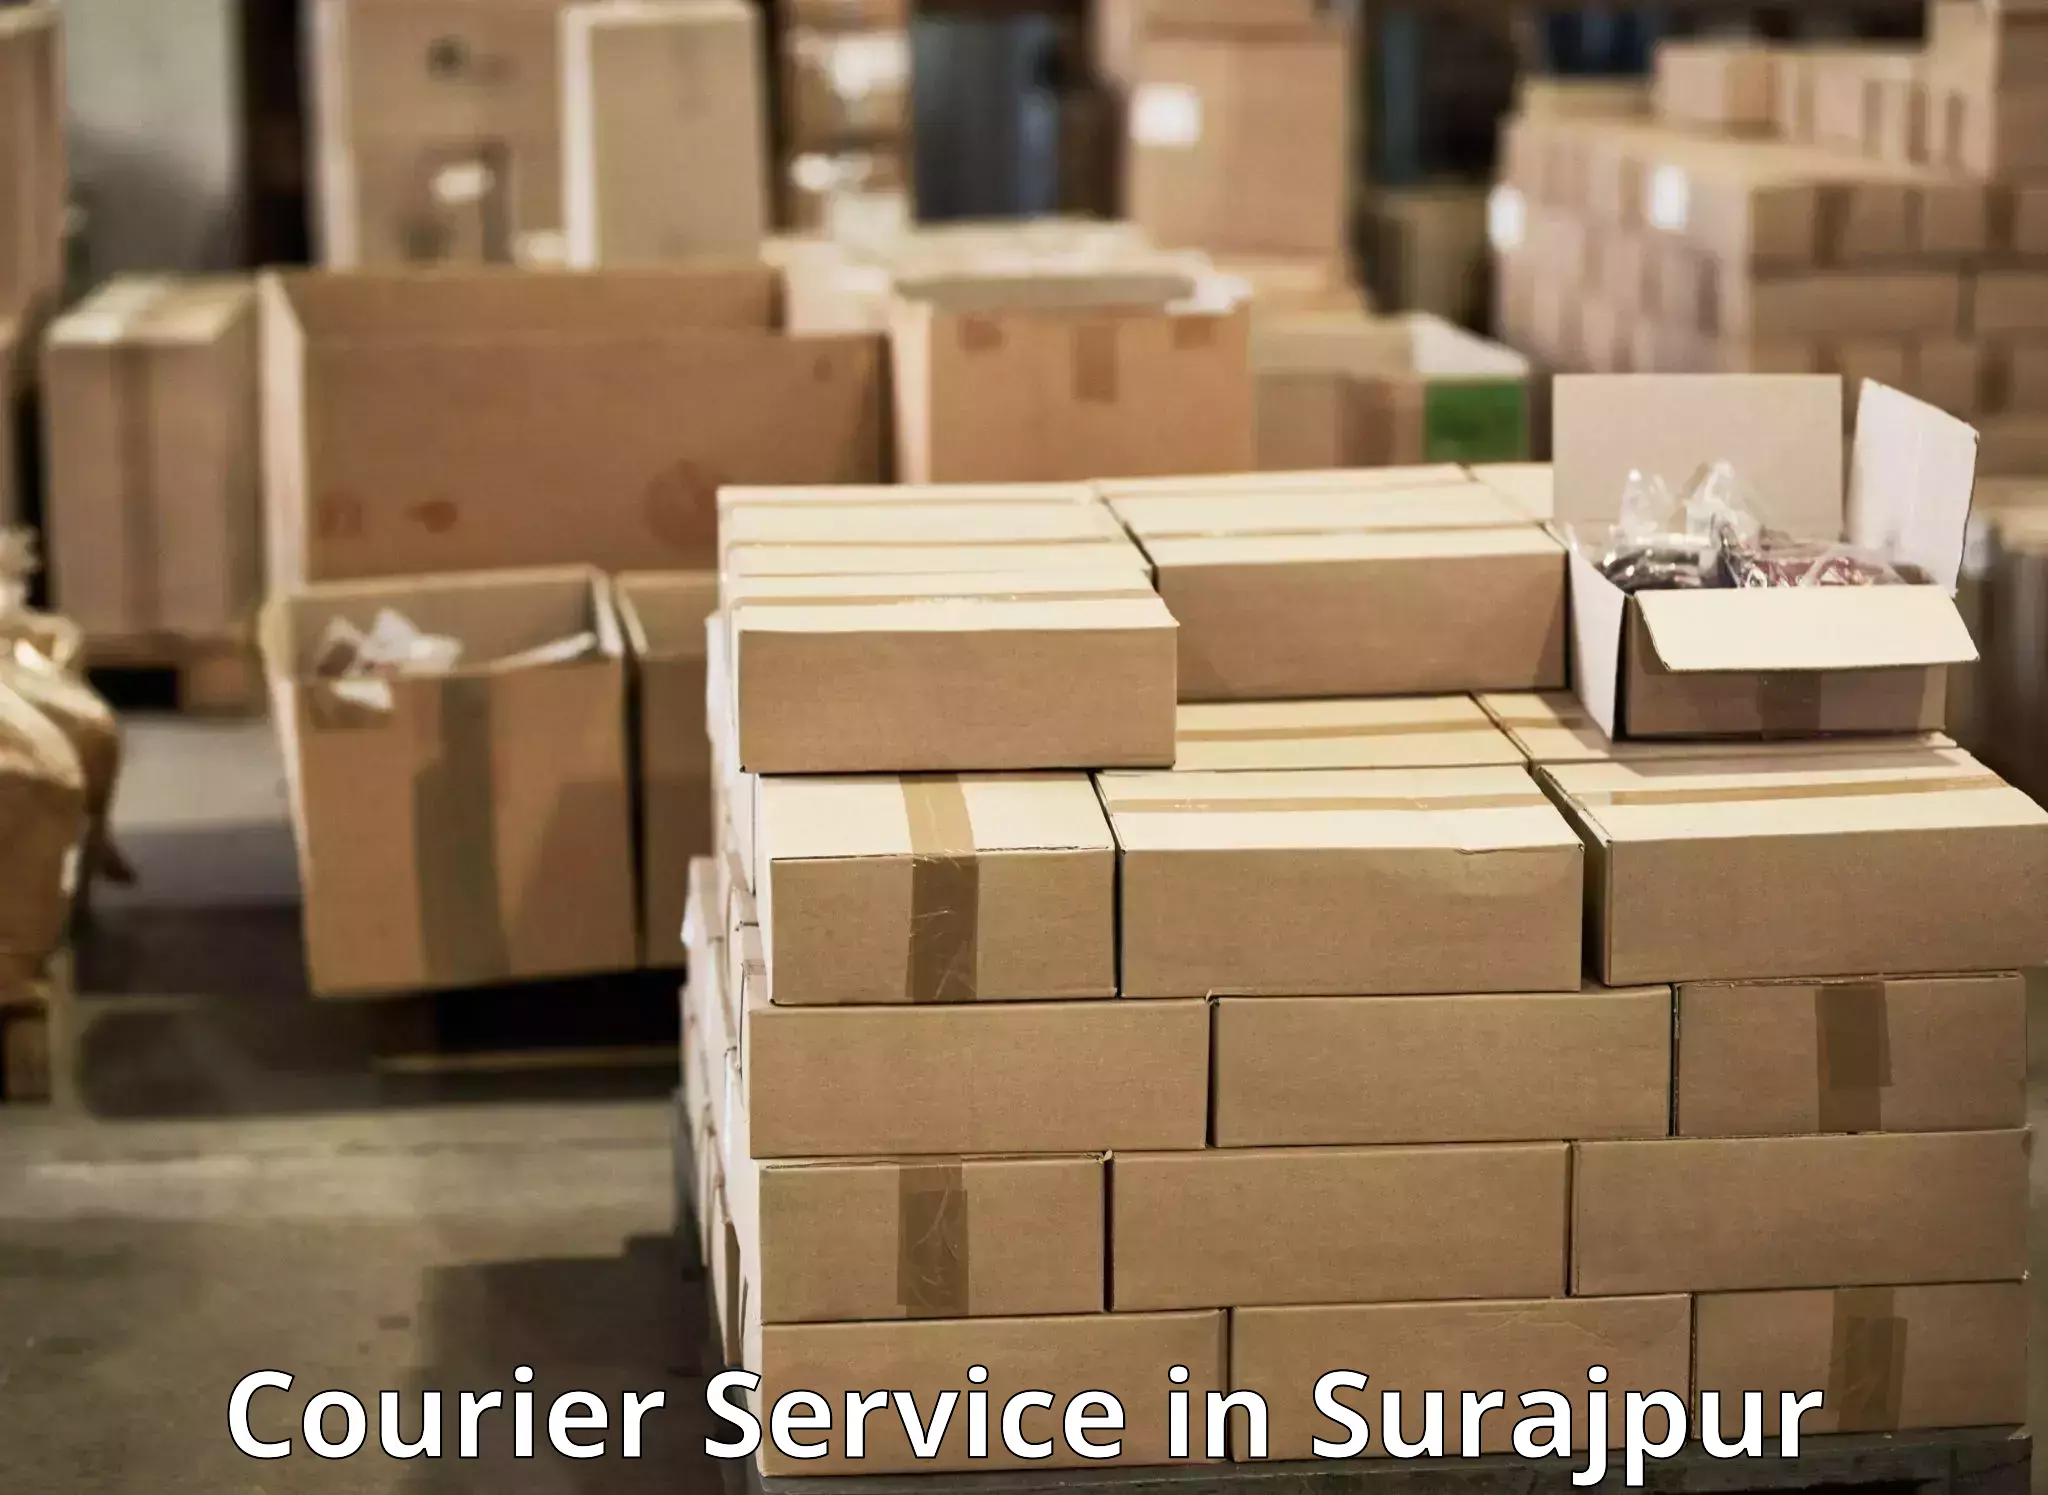 Efficient order fulfillment in Surajpur